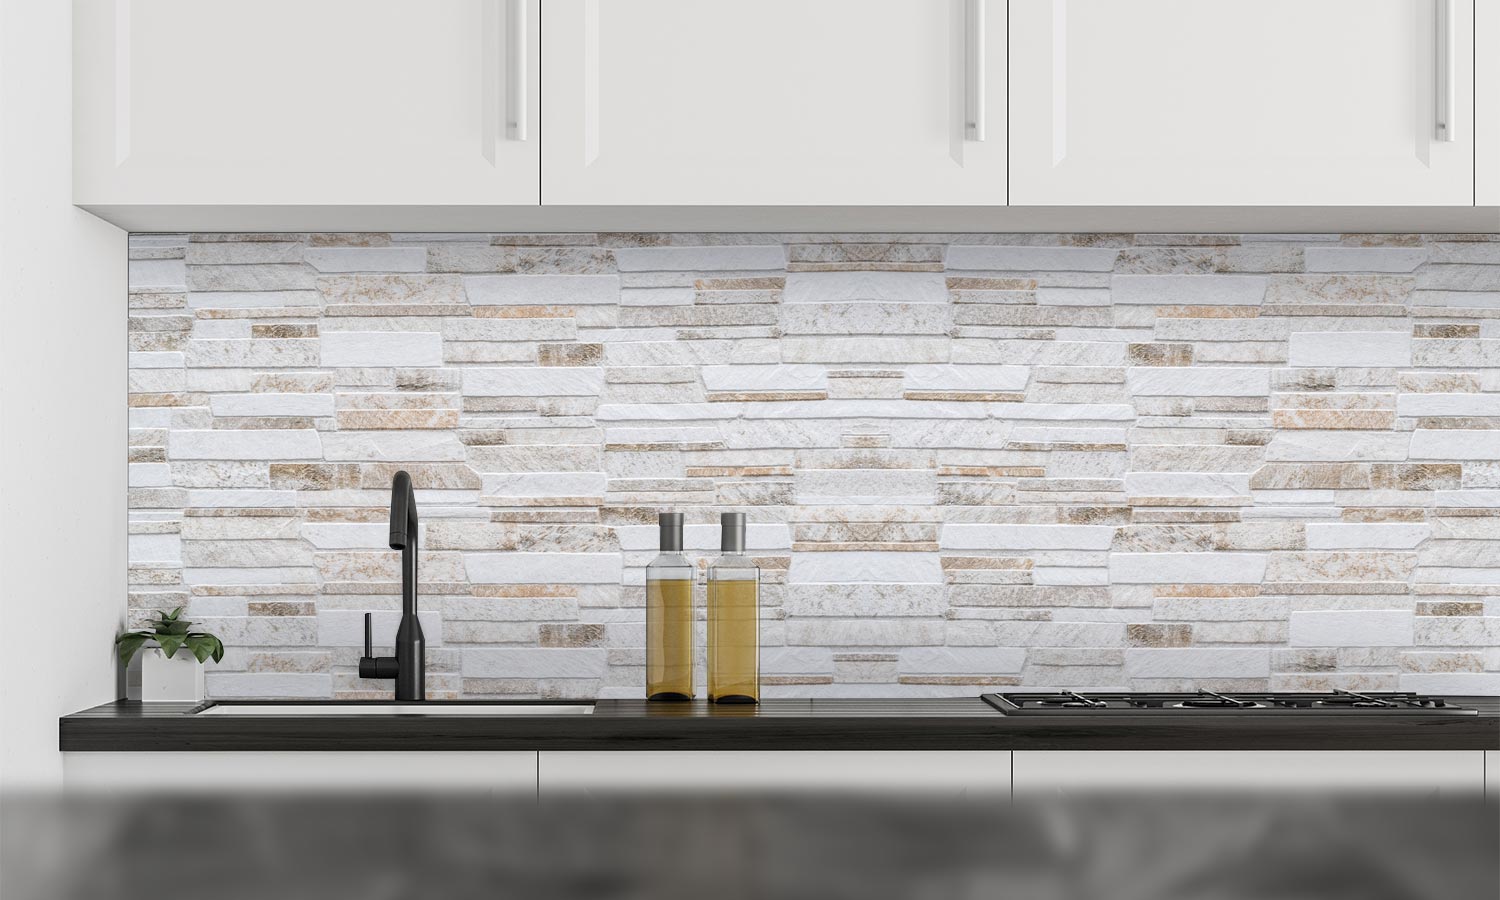 Paneli za kuhinje Brown white stone wall -  Stakleni / PVC ploče / Pleksiglas -  sa printom za kuhinju, Zidne obloge PKU068